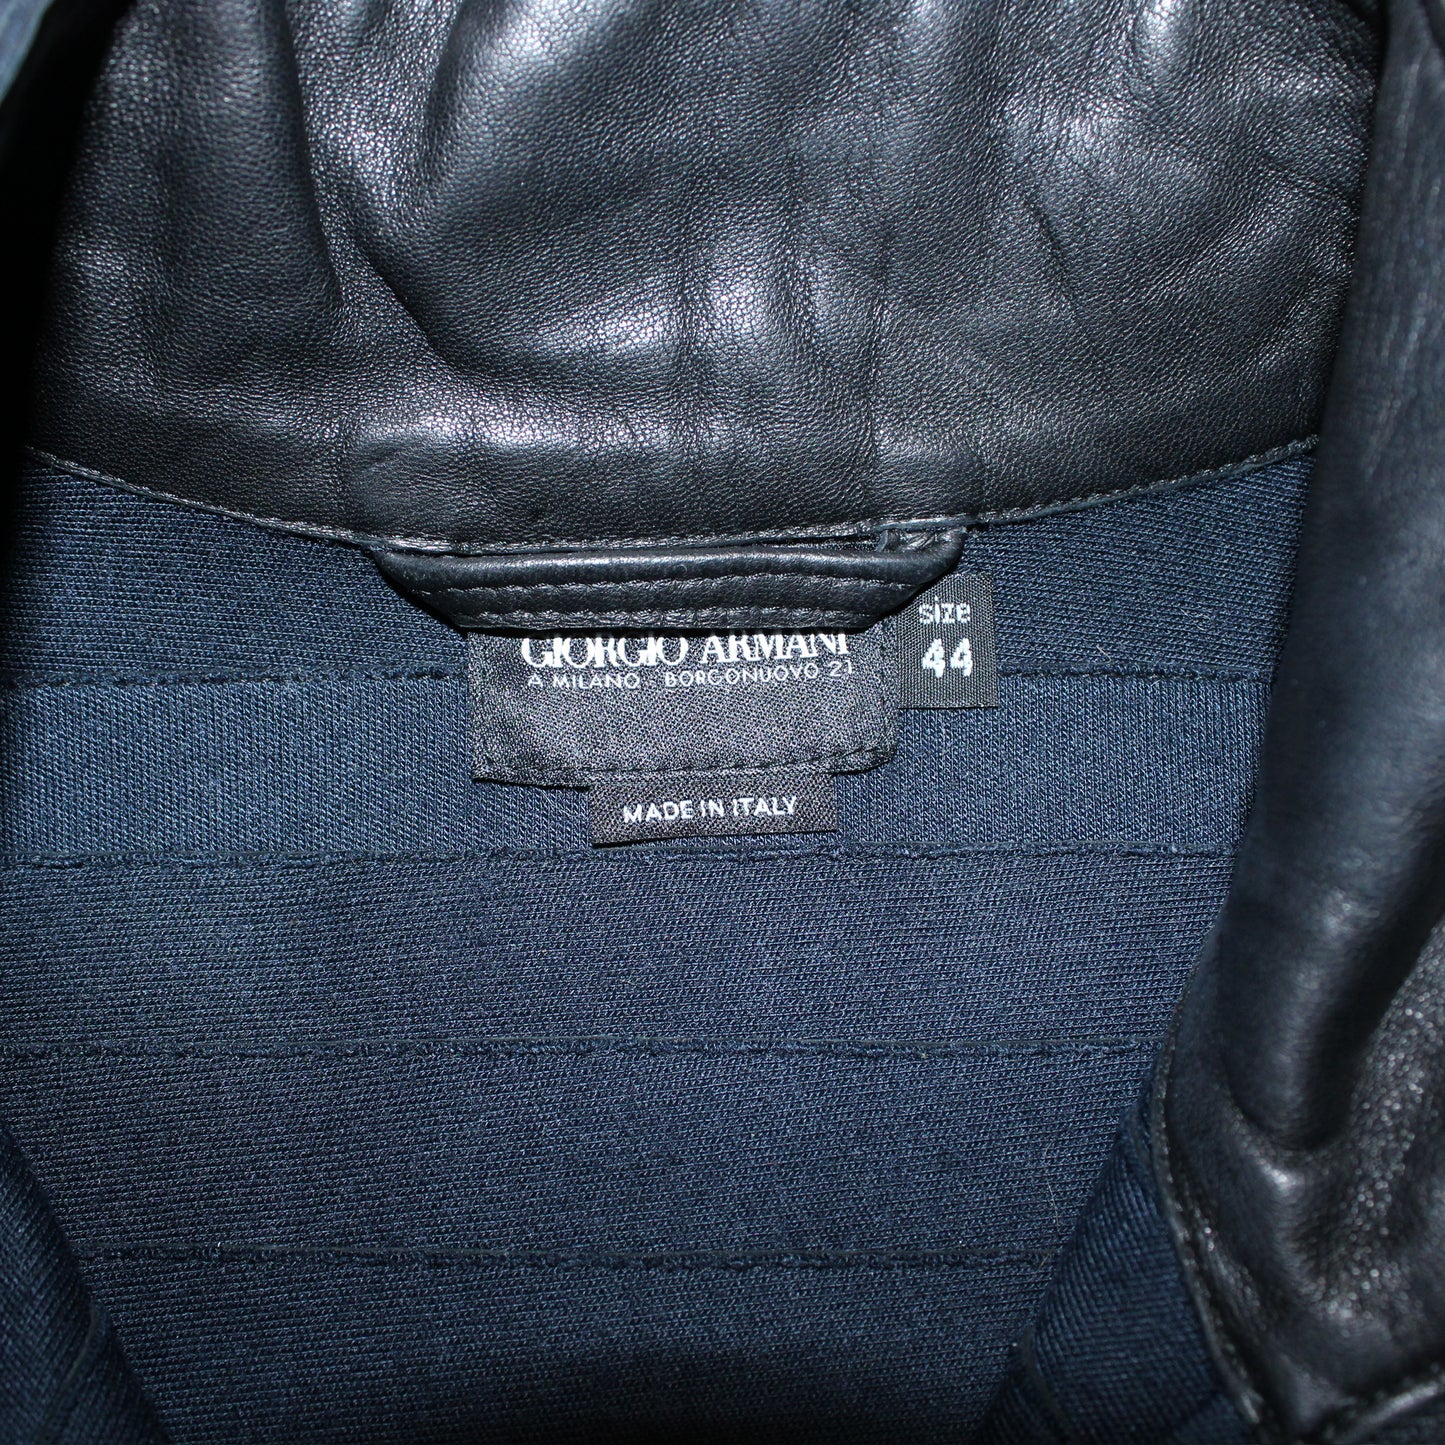 Armani leather vest